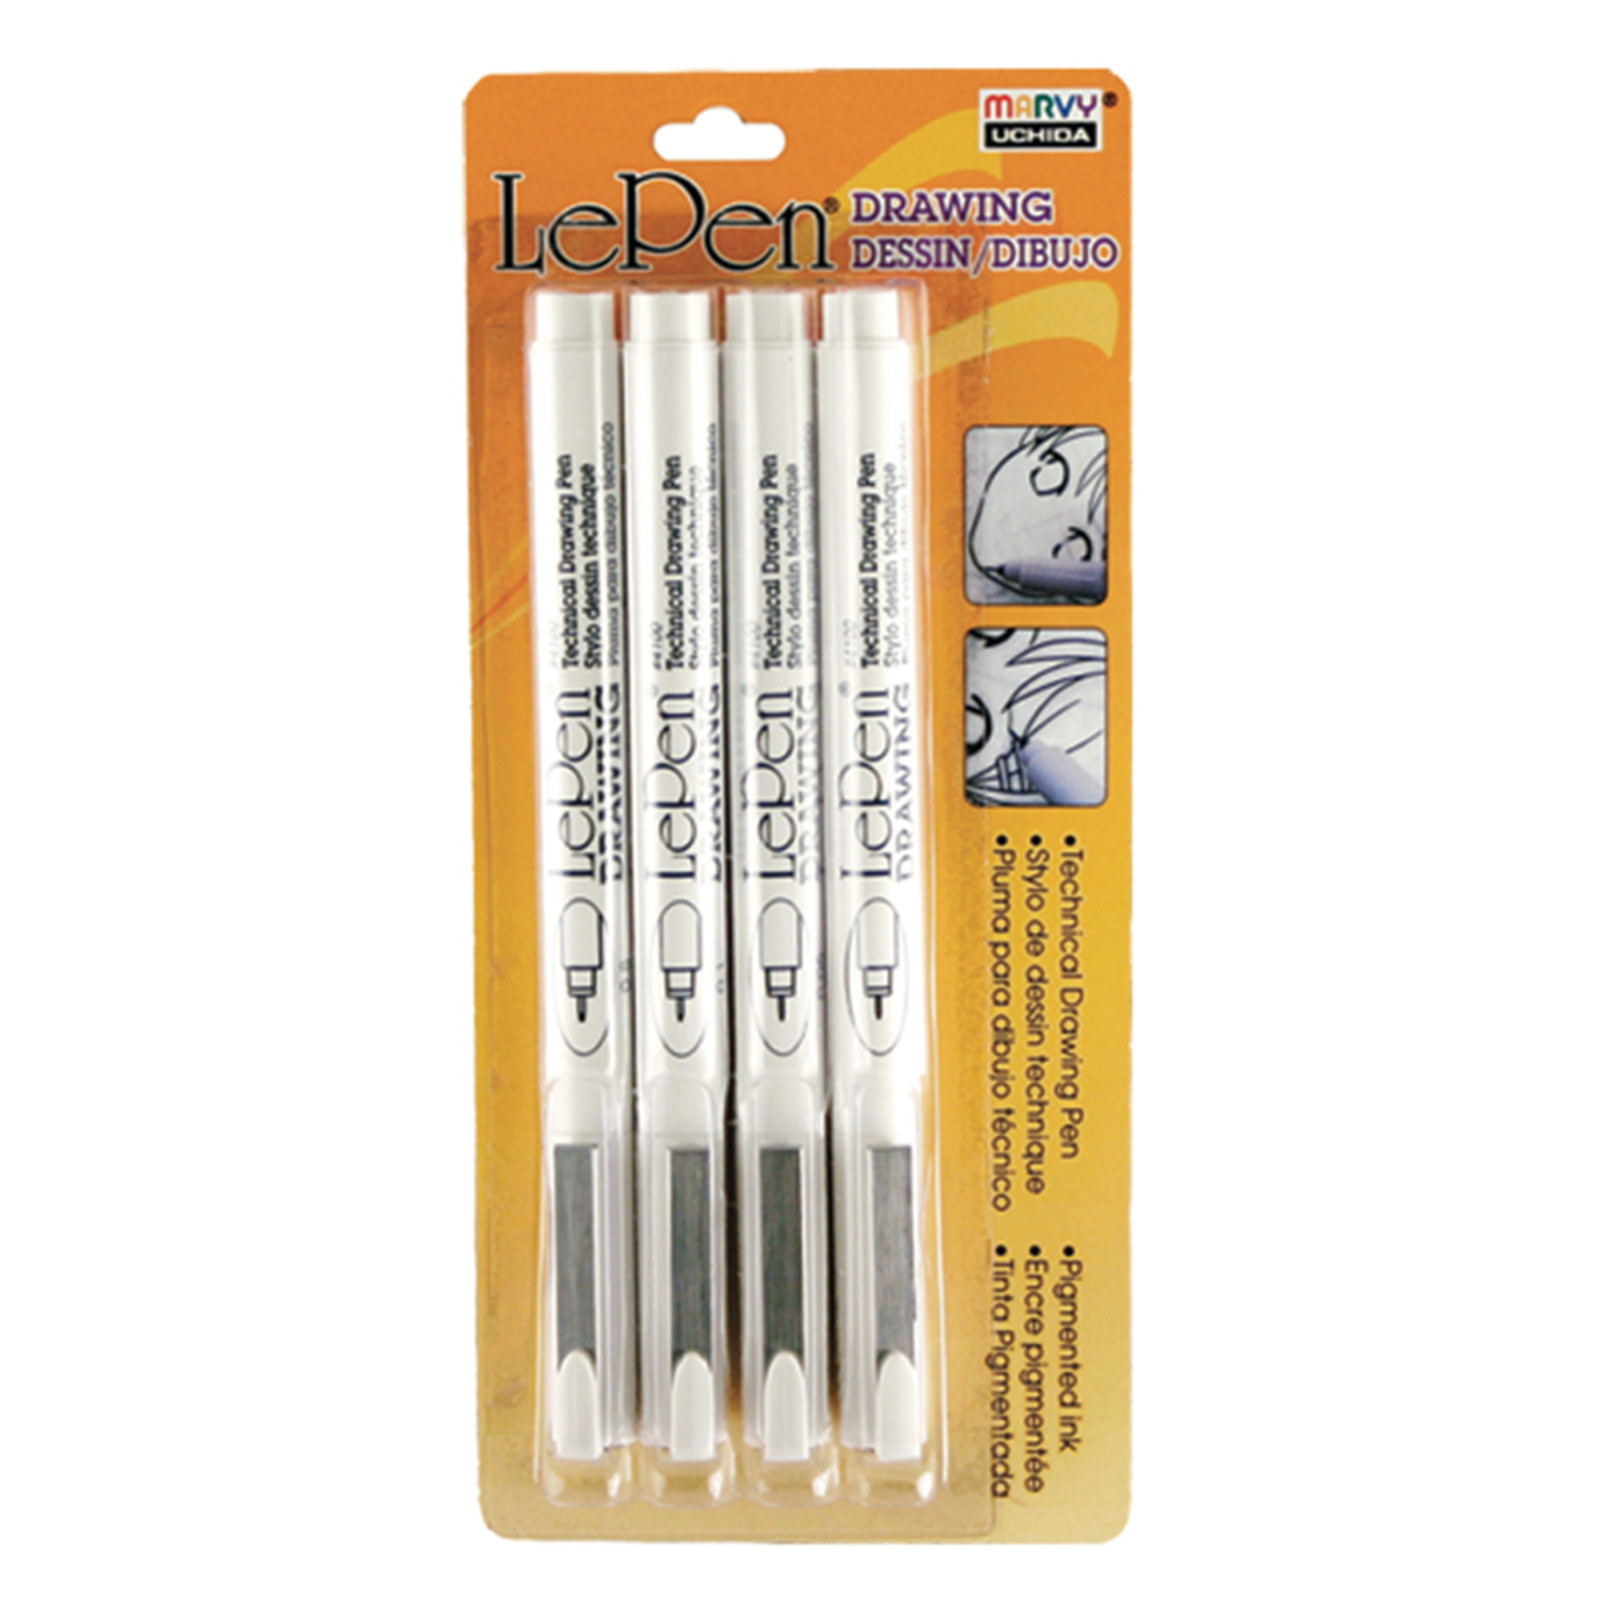 Uchida LePen™ Technical Drawing 4 Pen Set